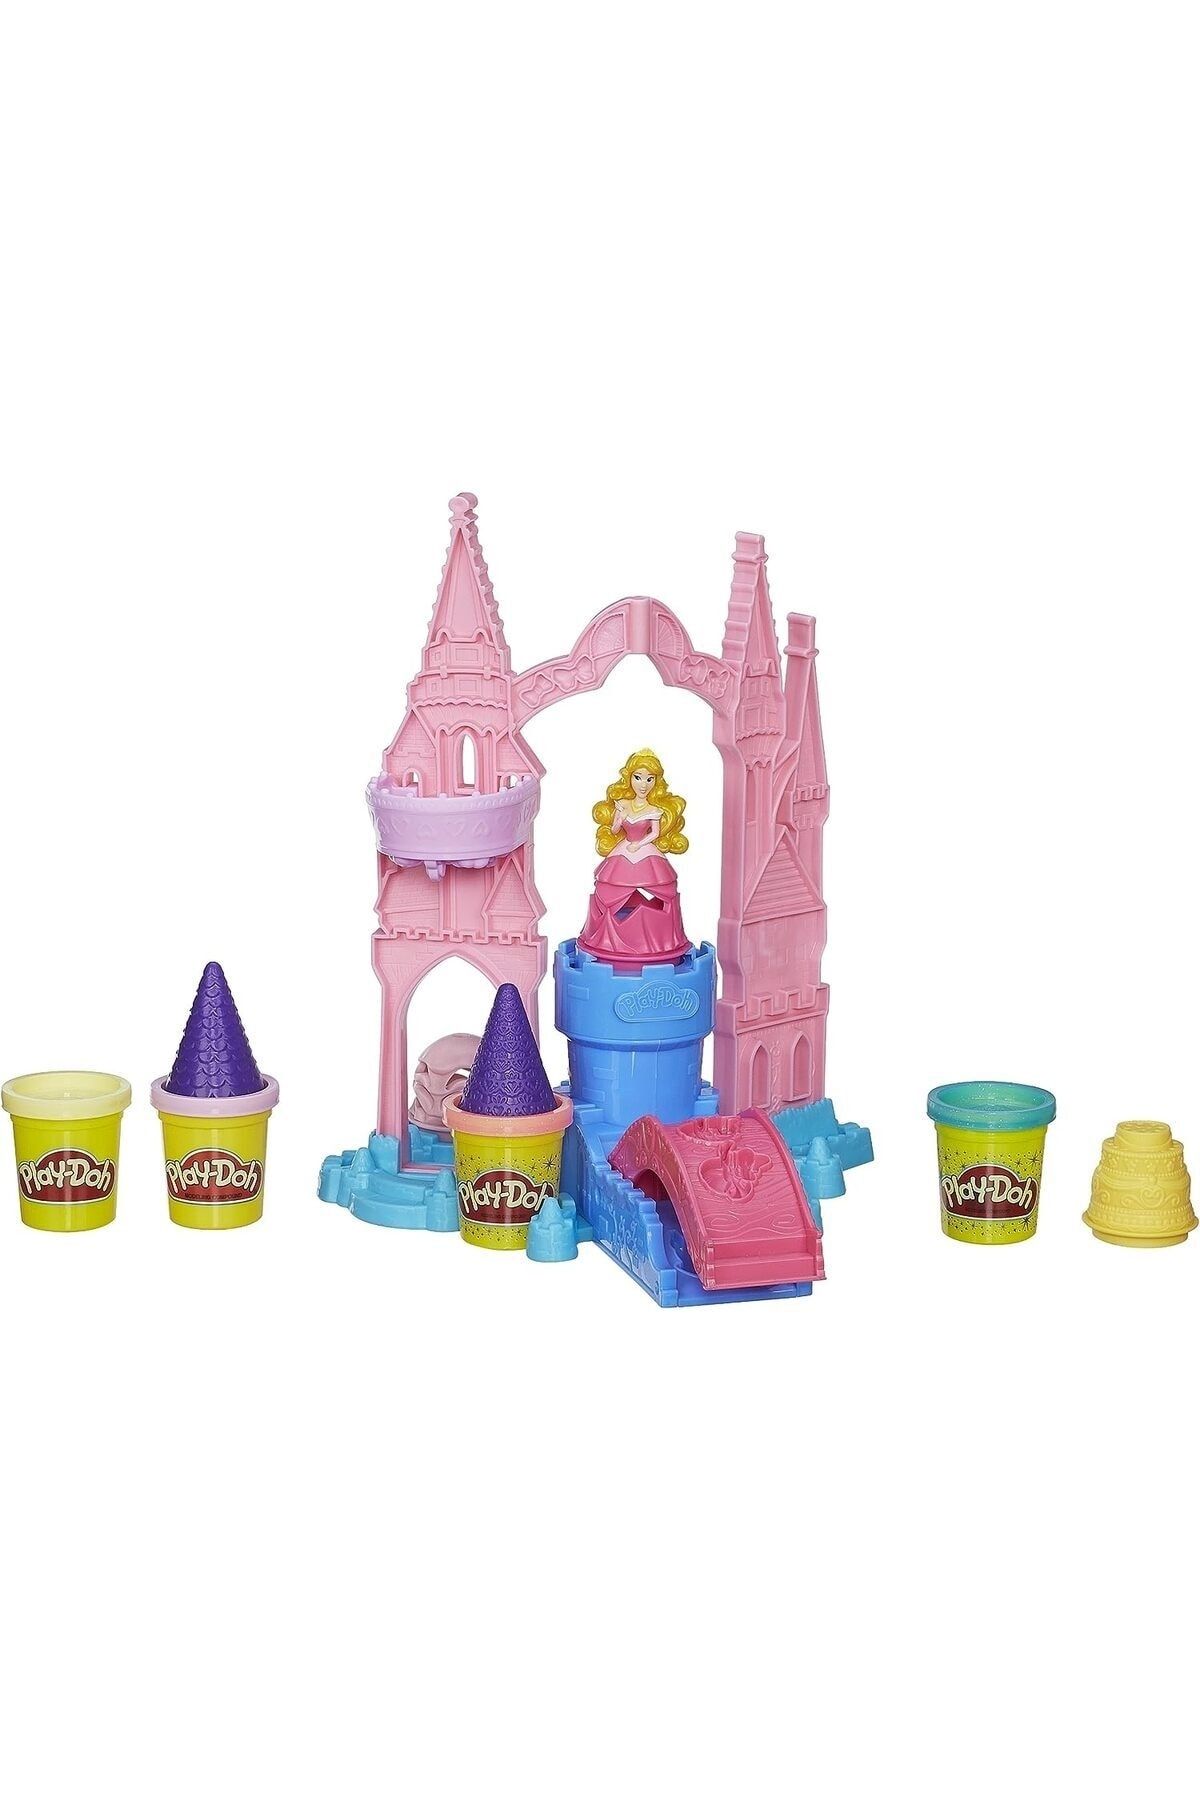 Hasbro Play-Doh Magical Designs Palace - Disney Princess Aurora